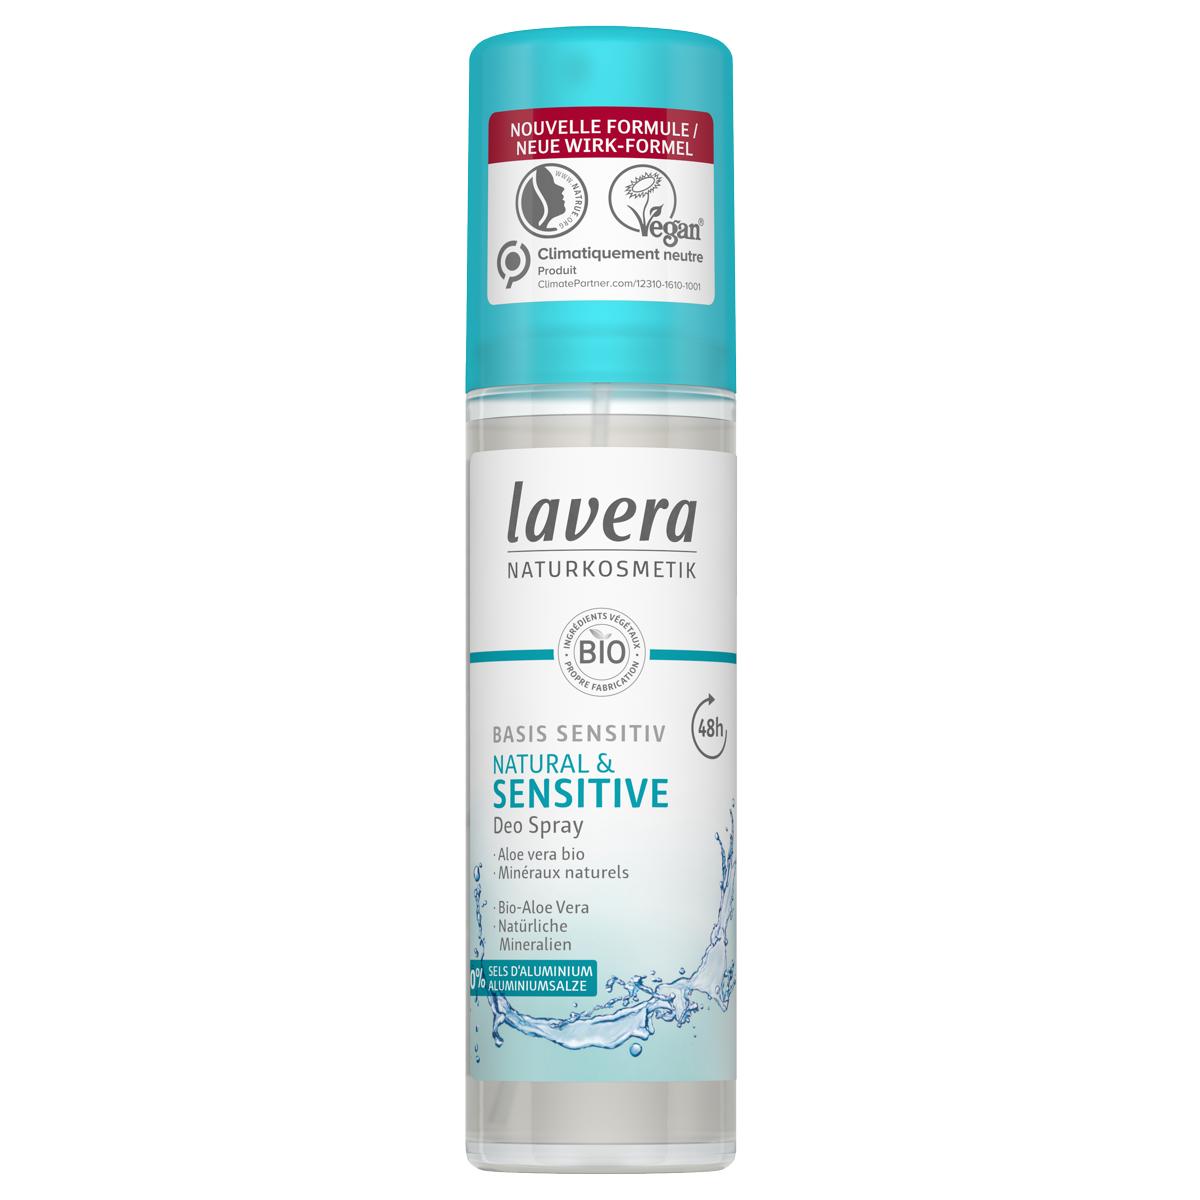 Lavera Deo Spray basis sensitiv Natural & Sensitive 75 ml